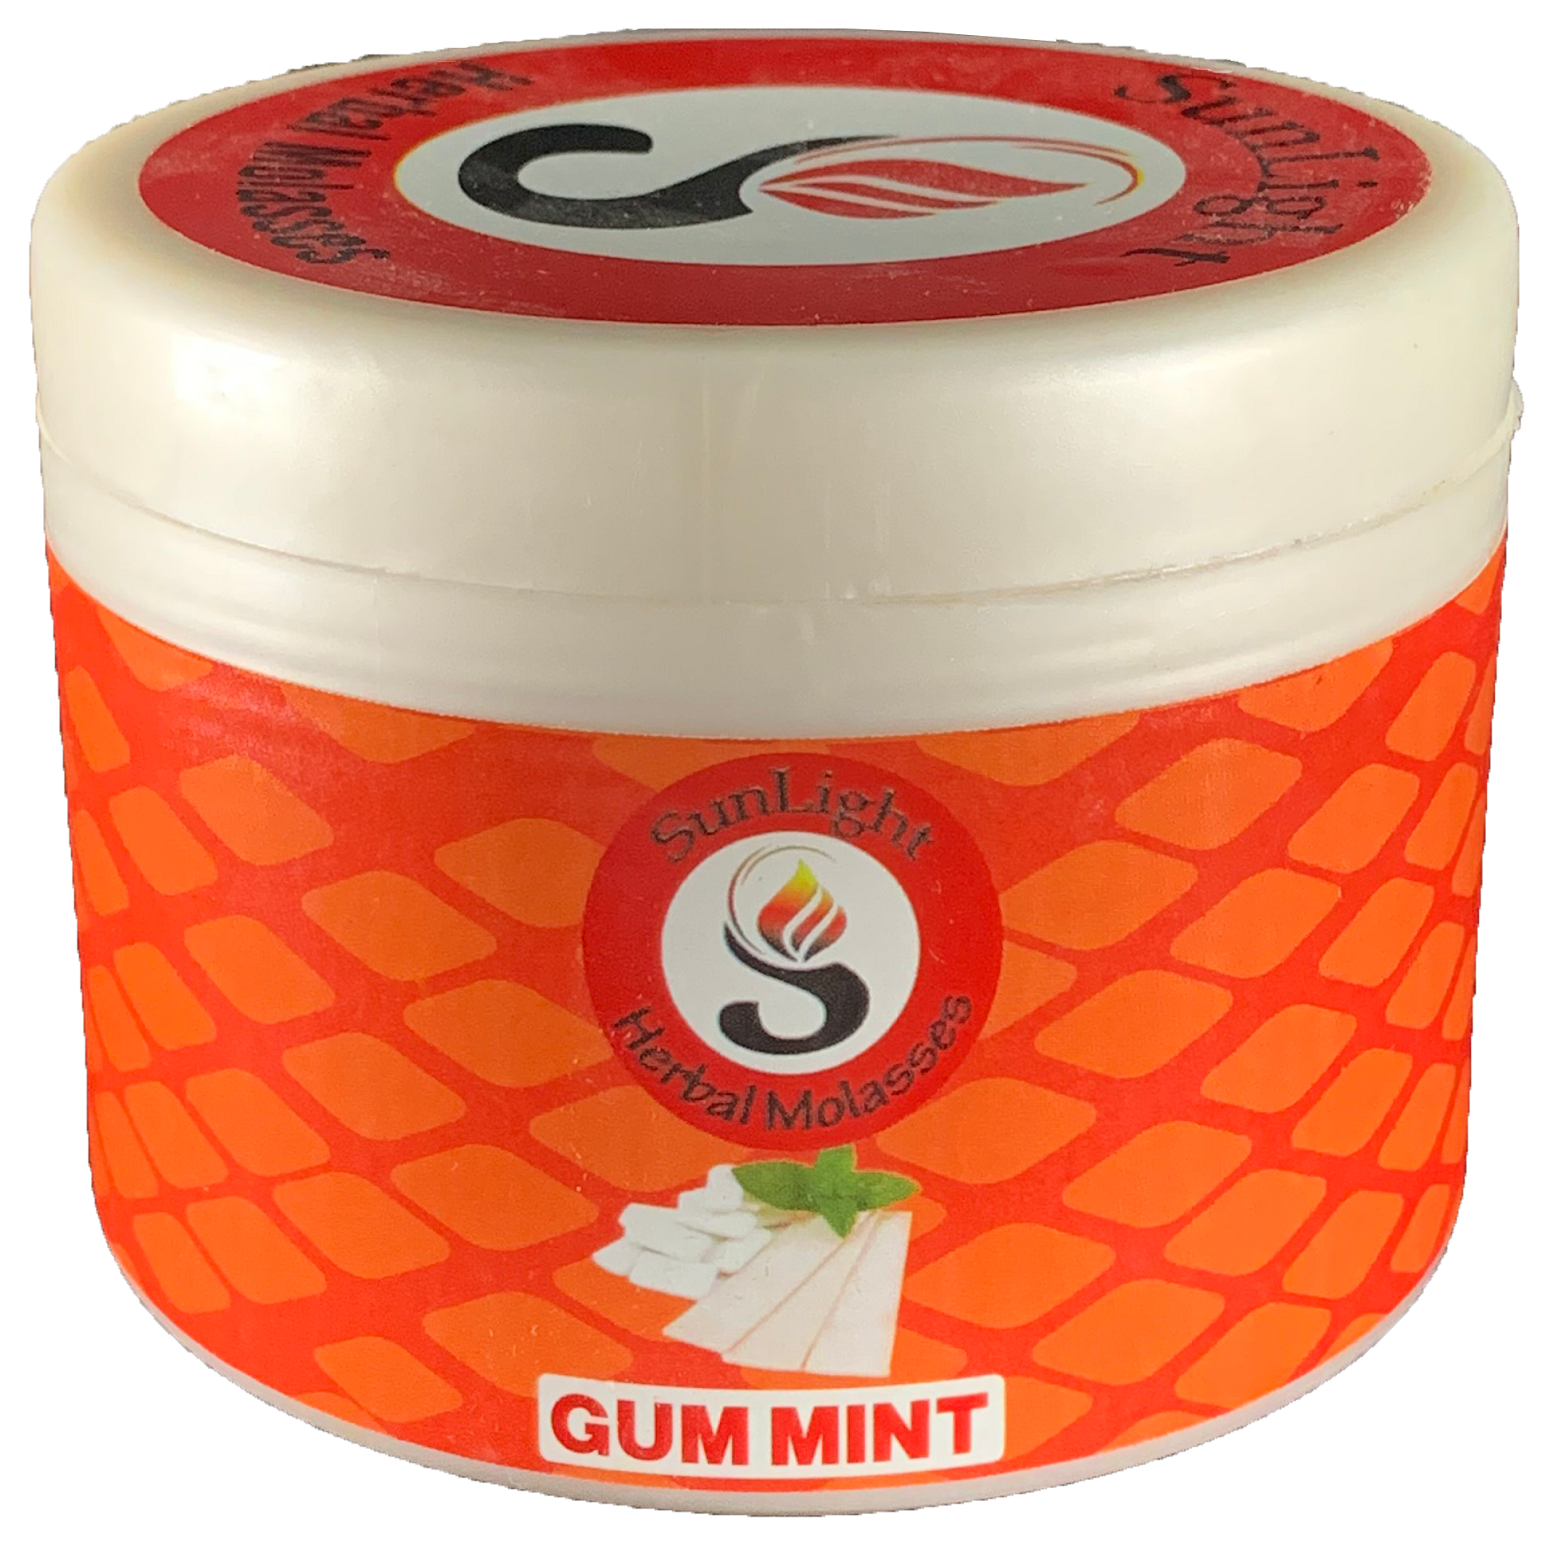 SunLight Non Tobacco 200gm Gum Mint